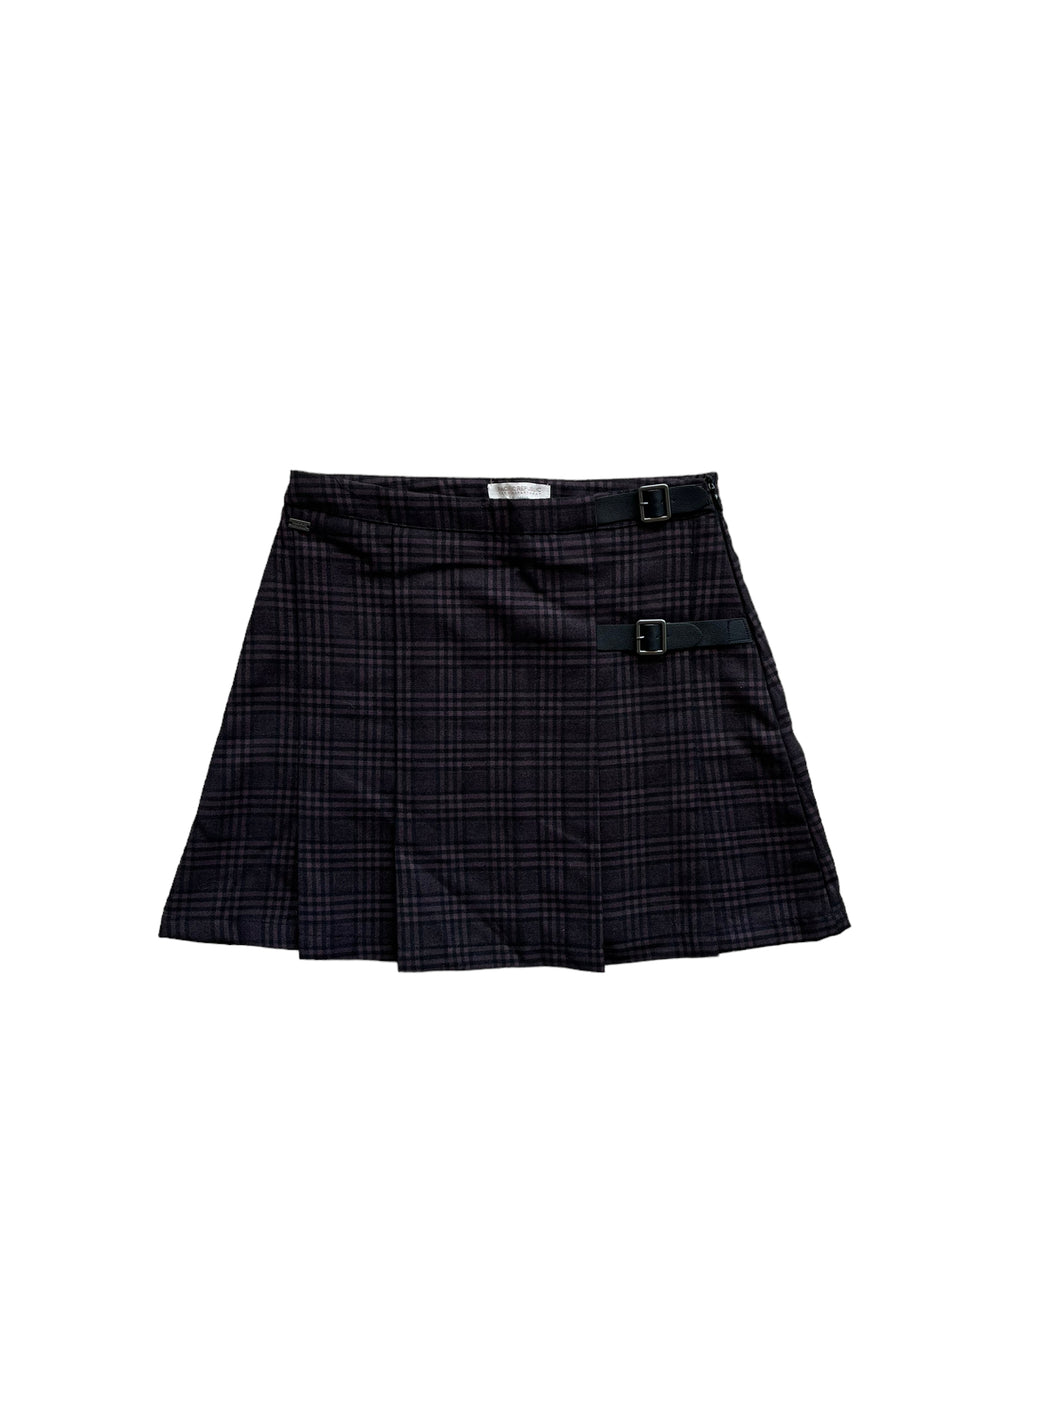 Schoolgirl Japanese style mini skirt